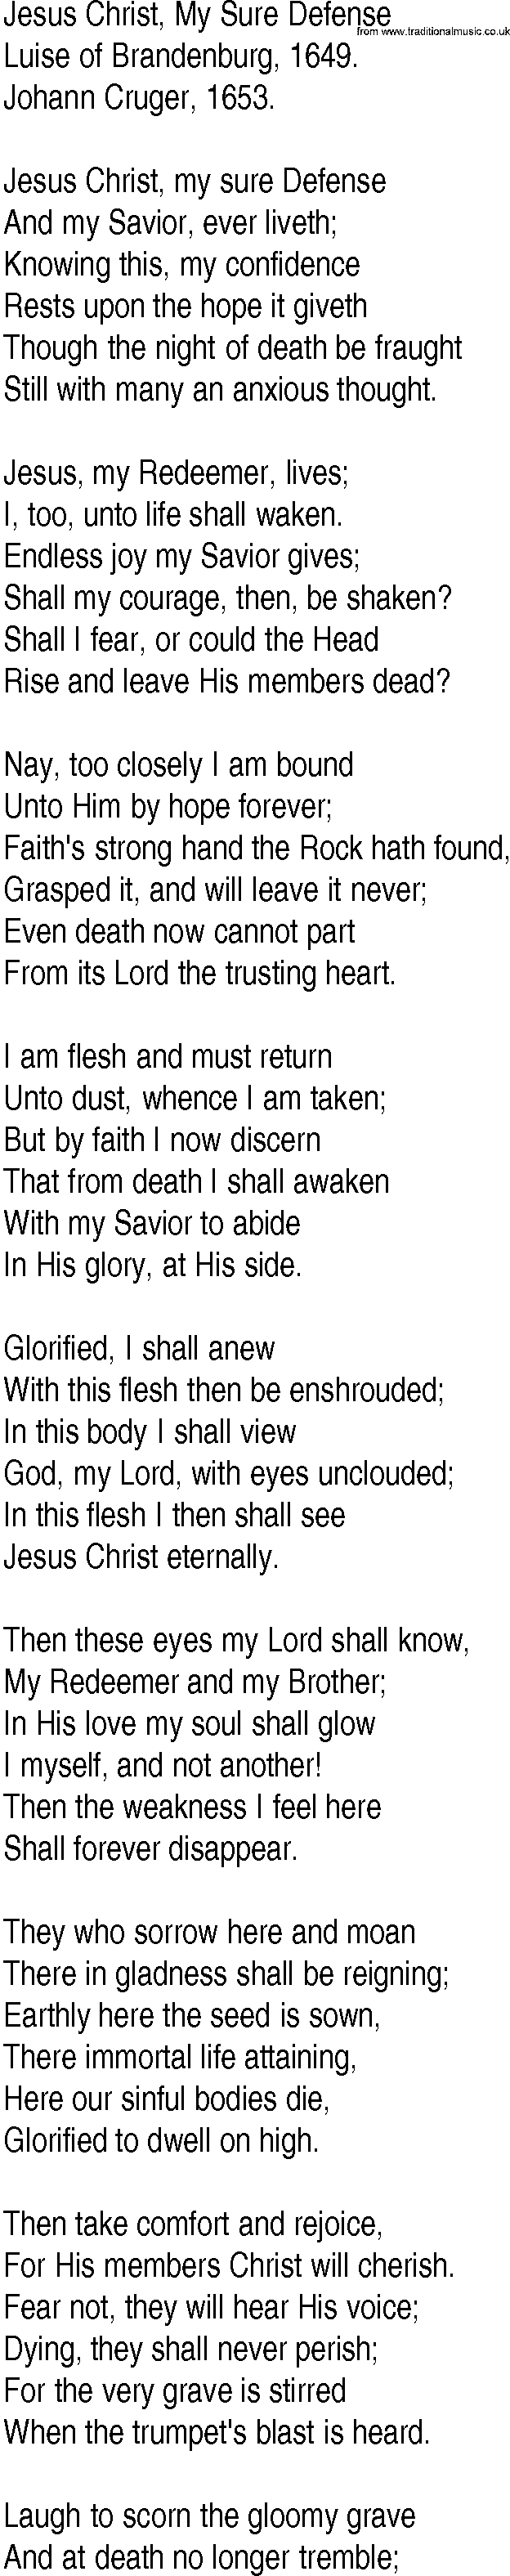 Hymn and Gospel Song: Jesus Christ, My Sure Defense by Luise of Brandenburg lyrics